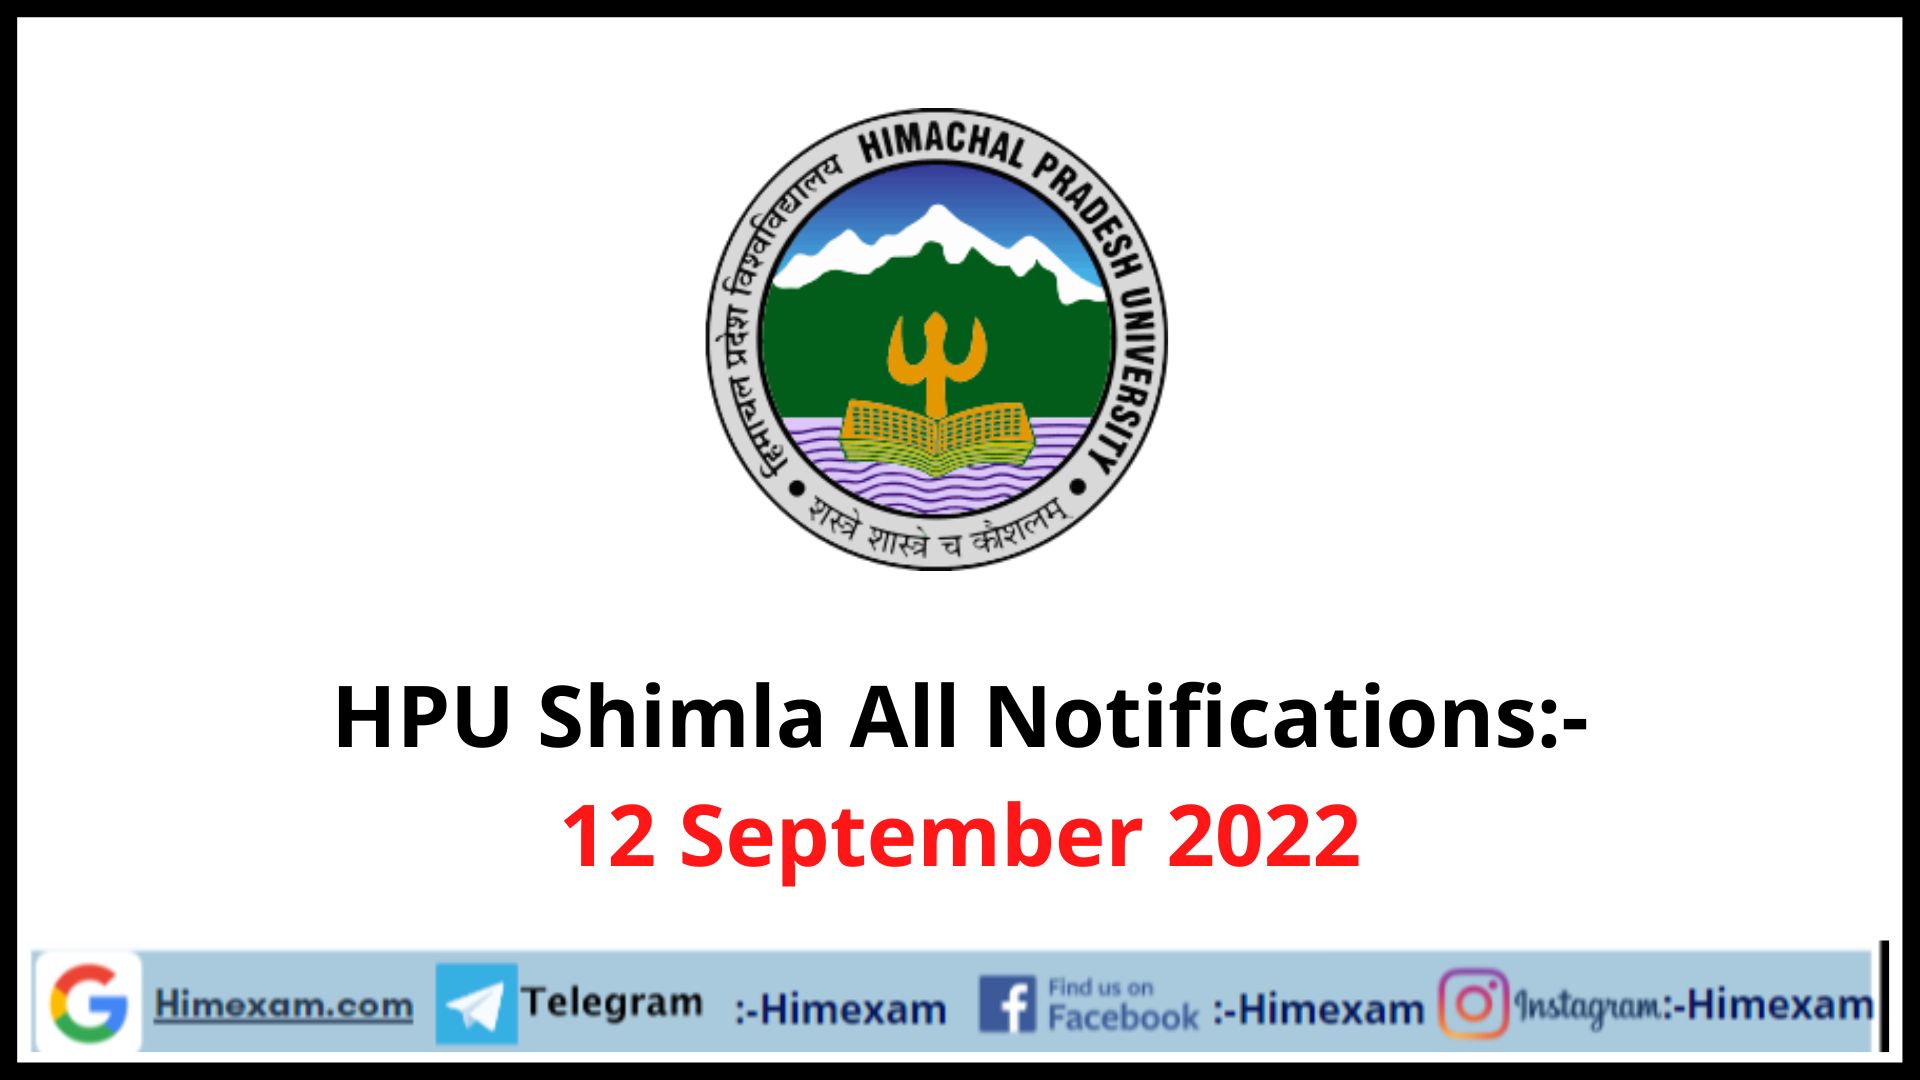 HPU Shimla All Notifications:- 12 September 2022